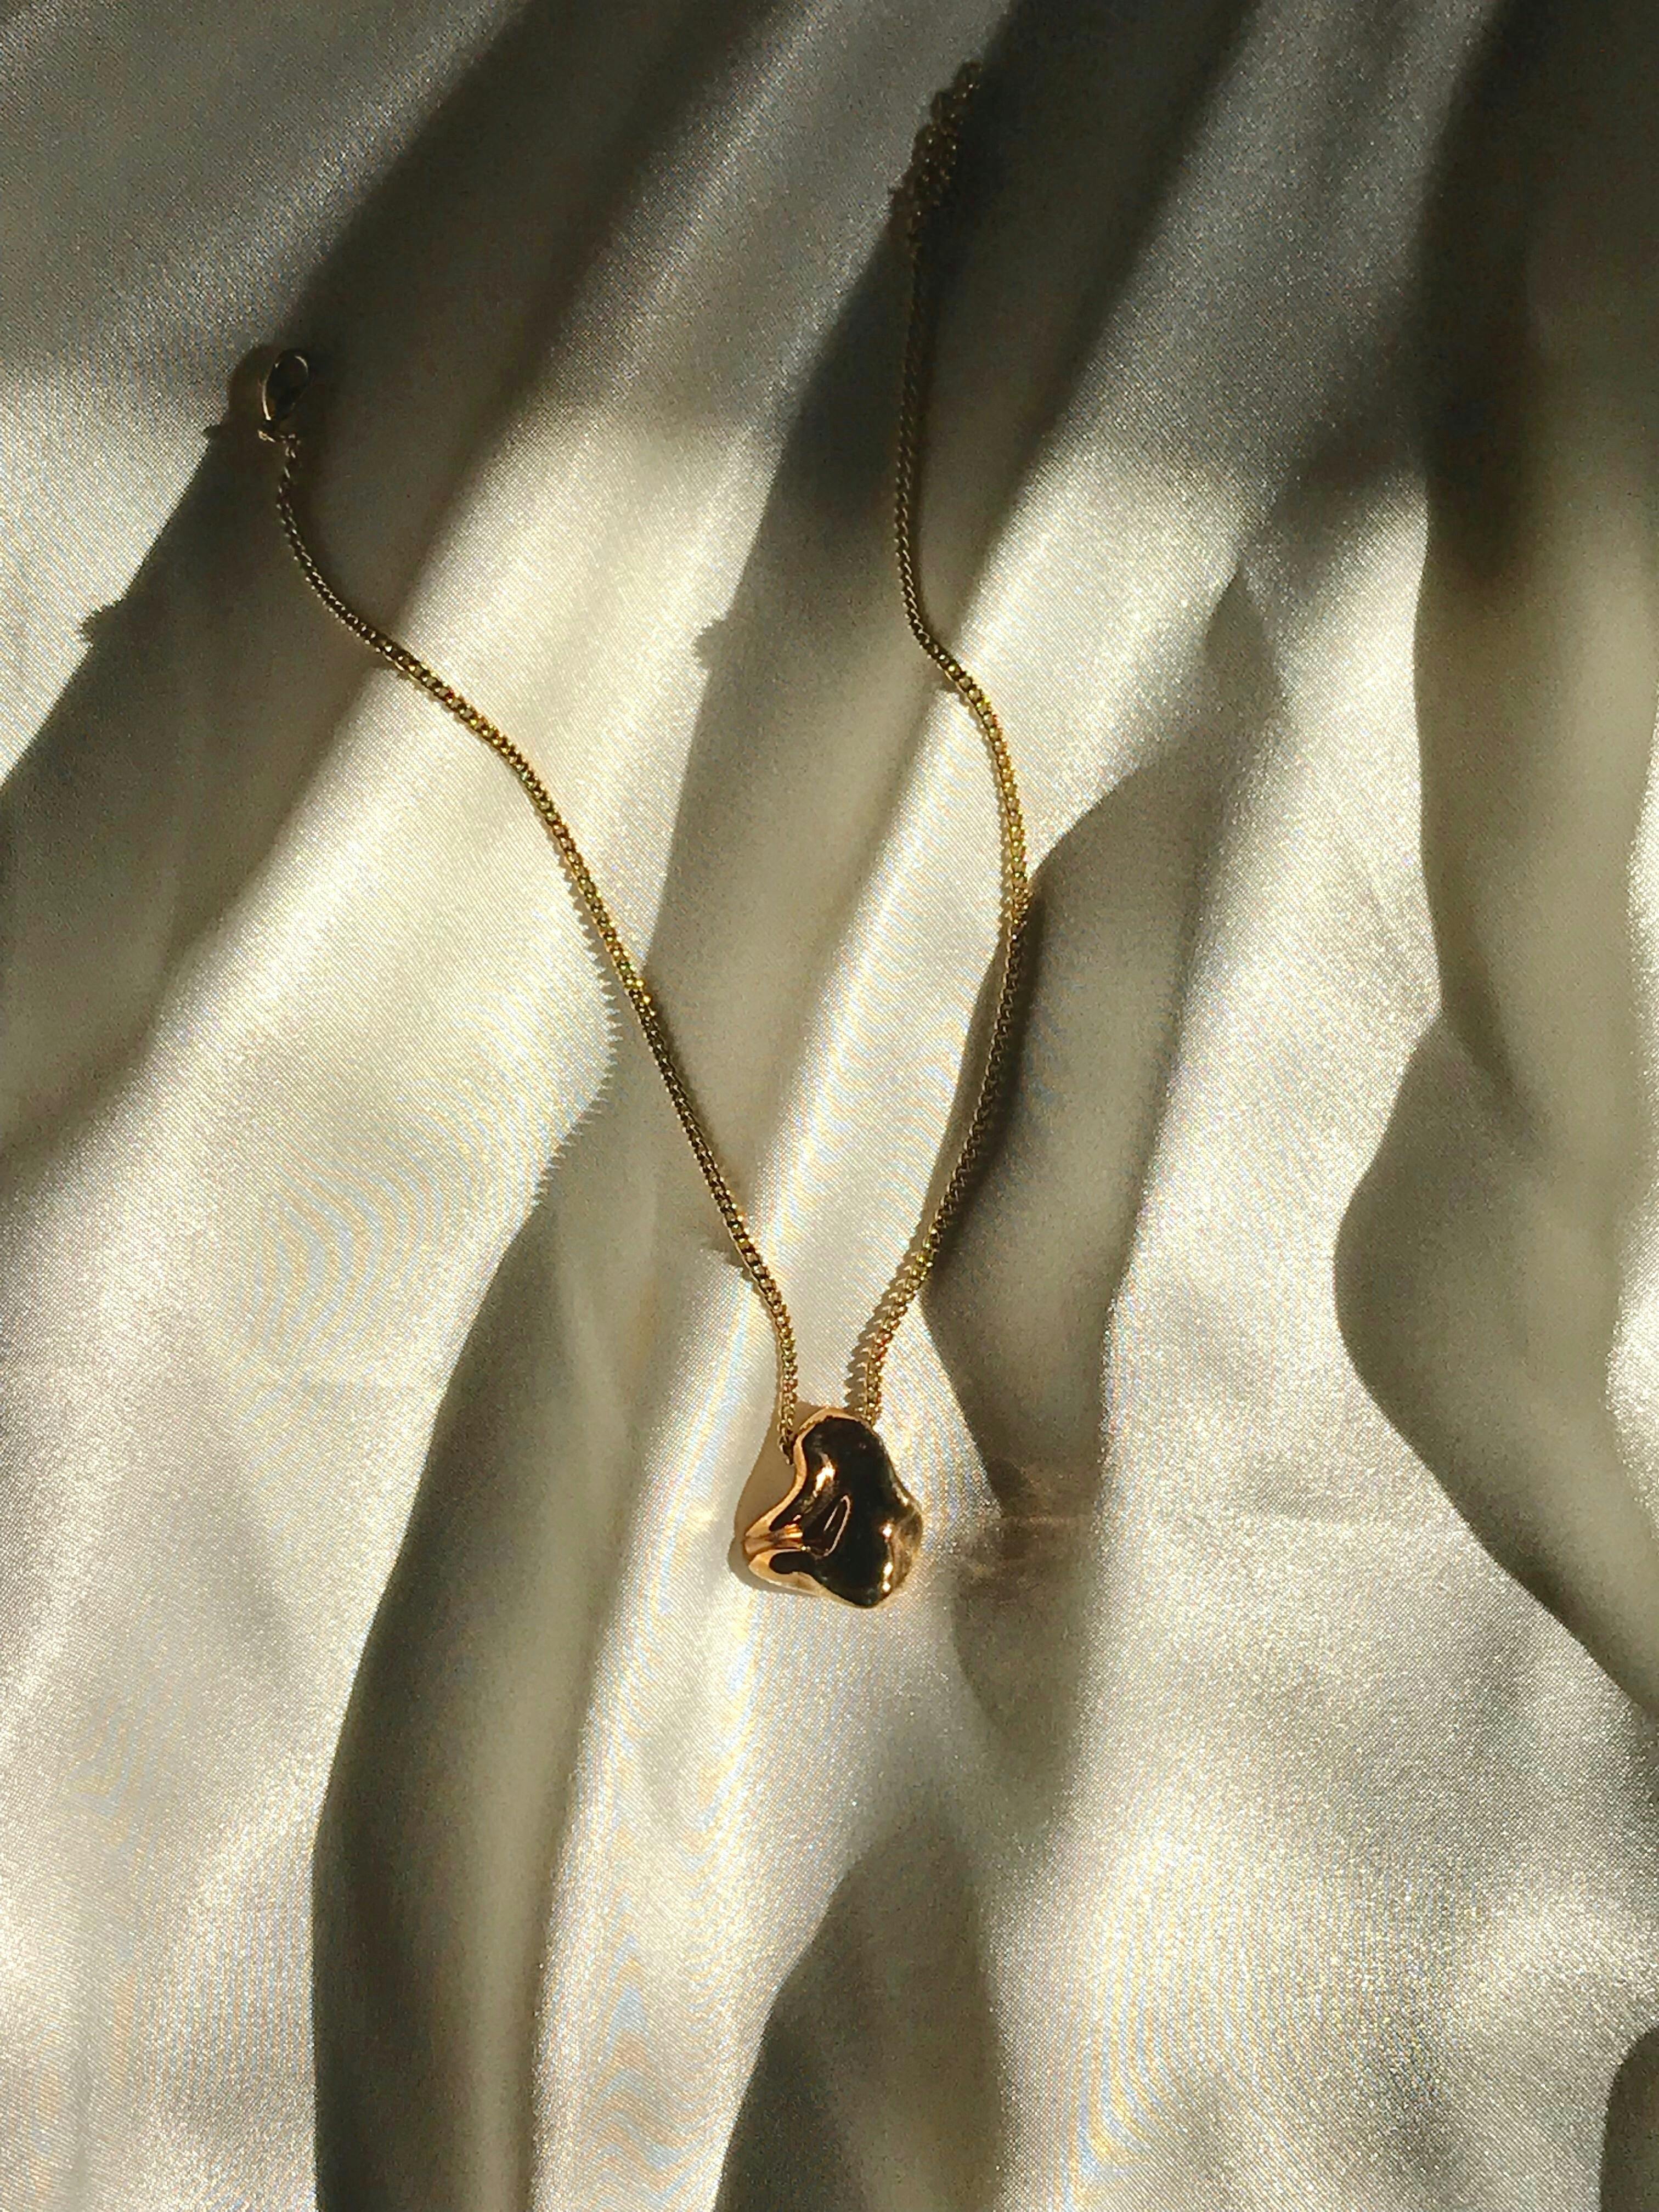 black gemstone pendant necklace on white satin textile